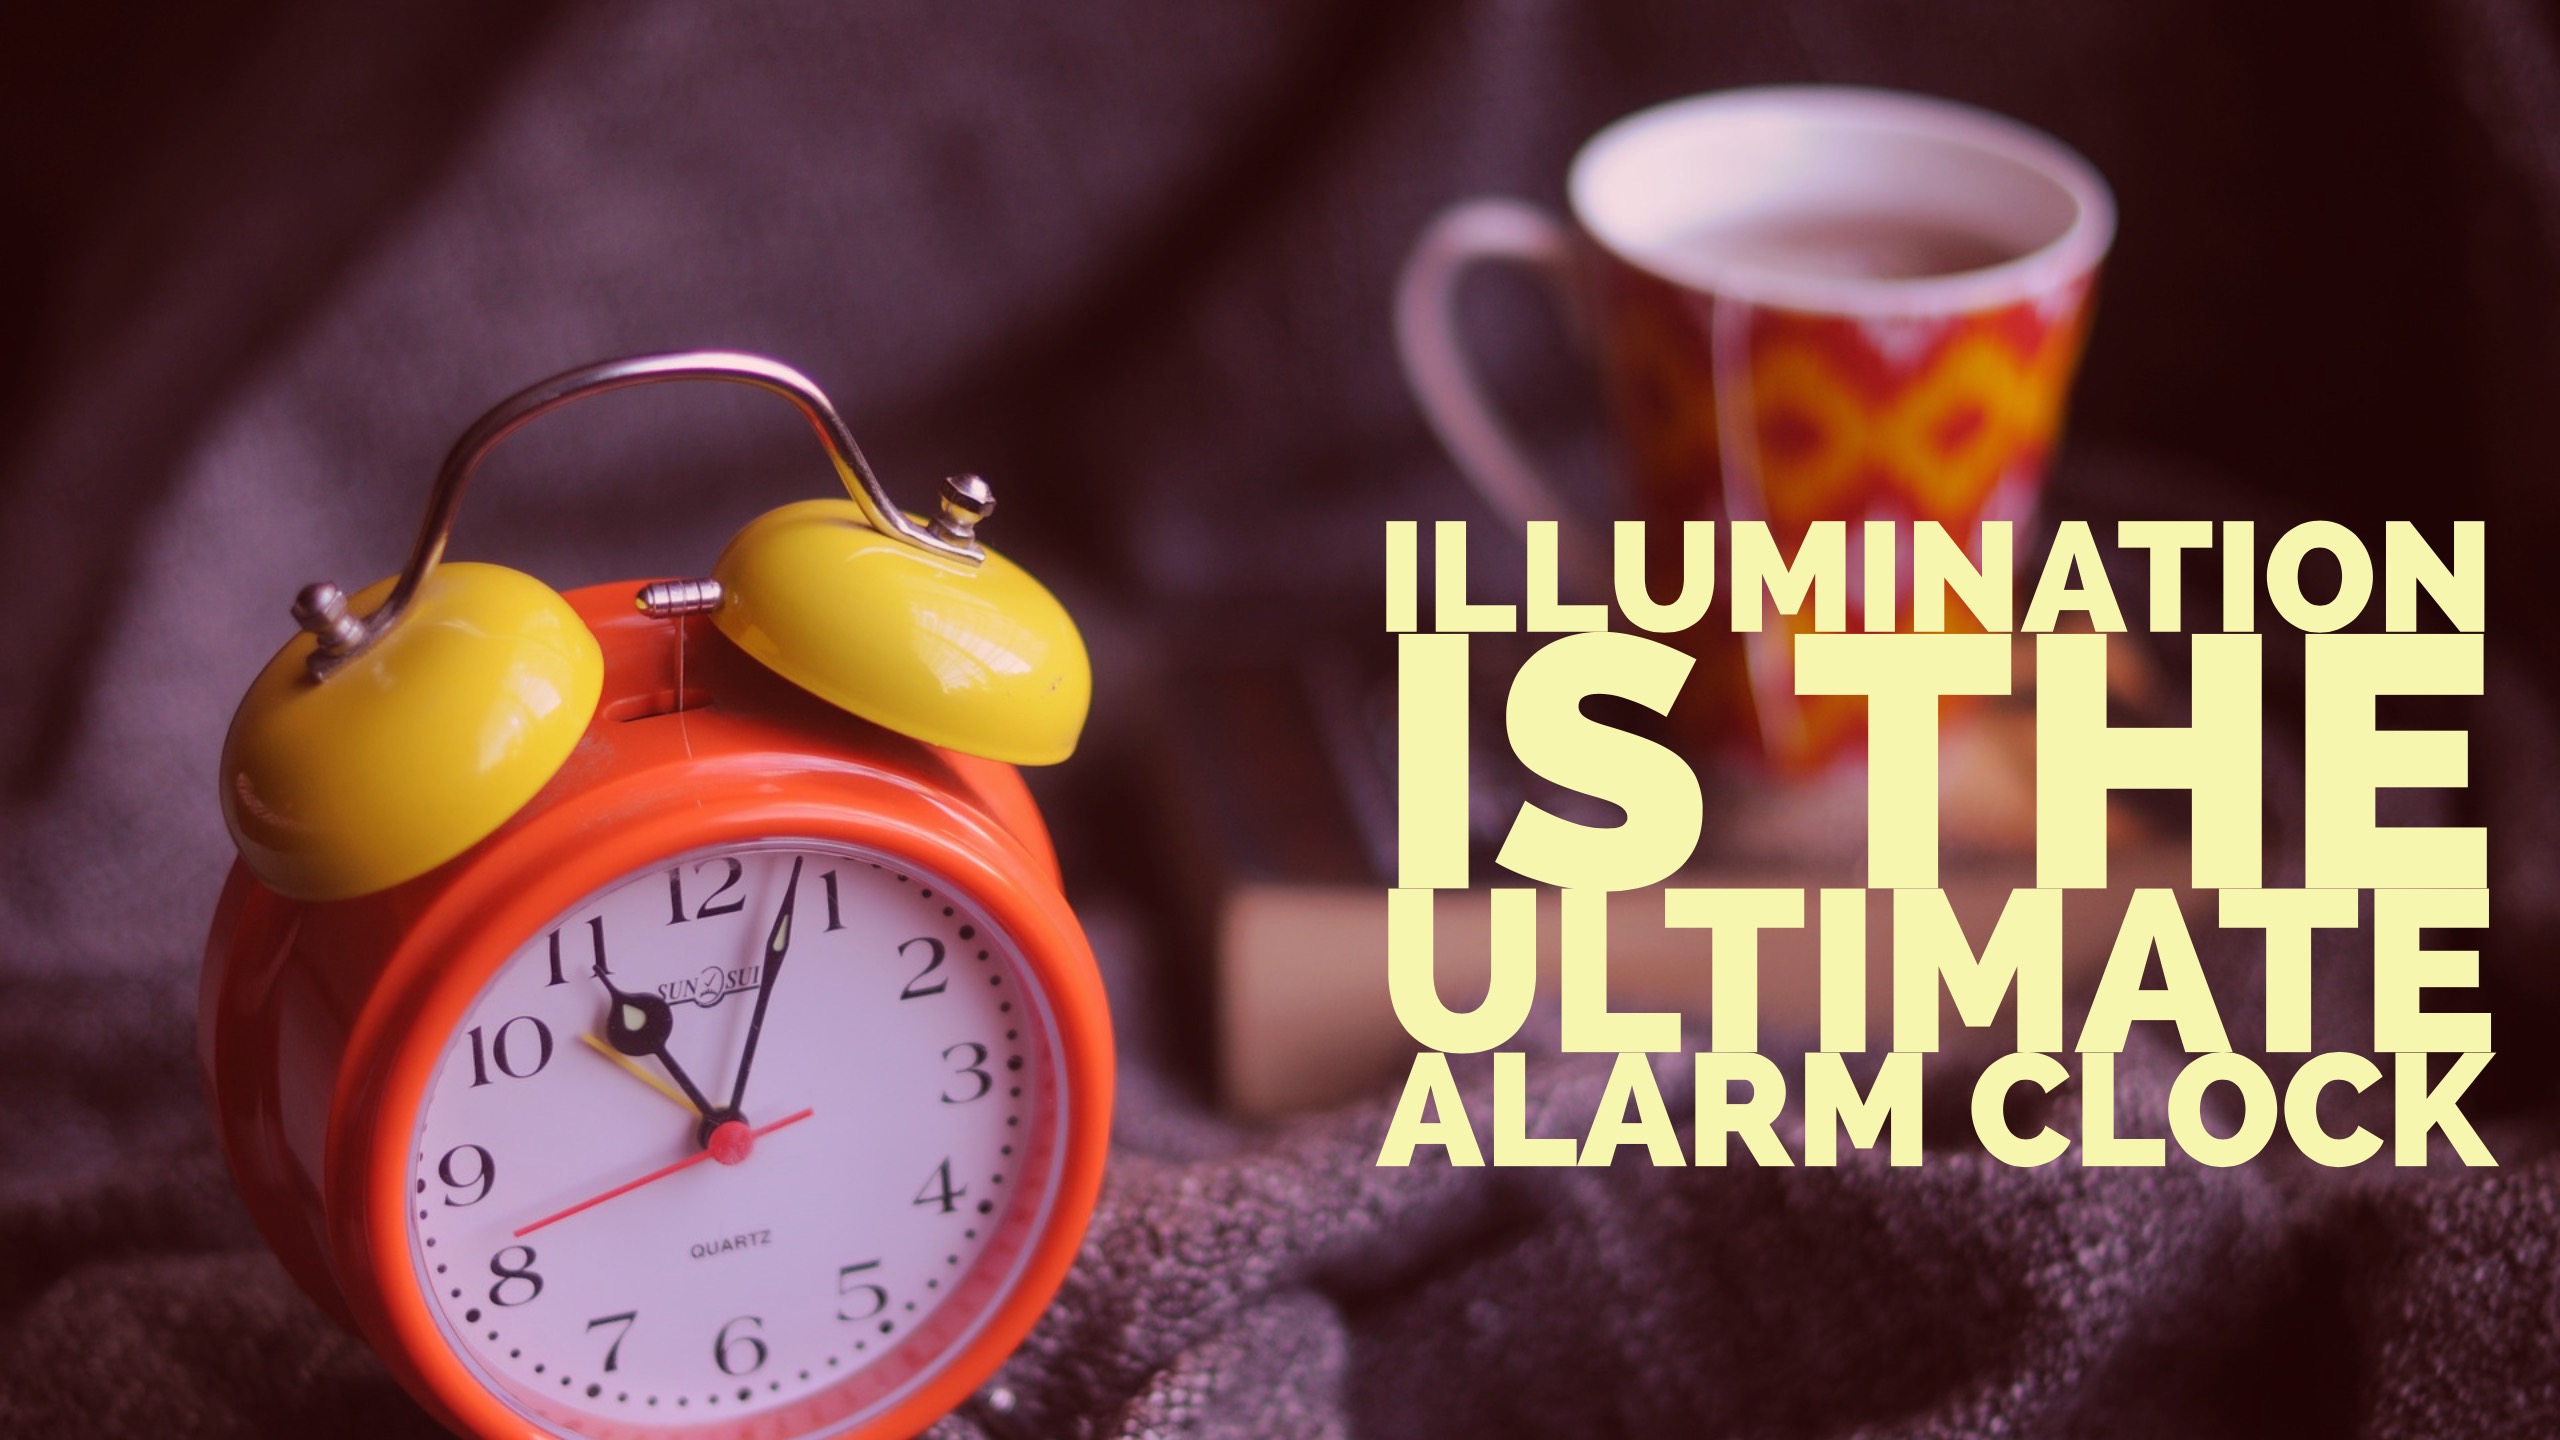 The Ultimate Alarm Clock